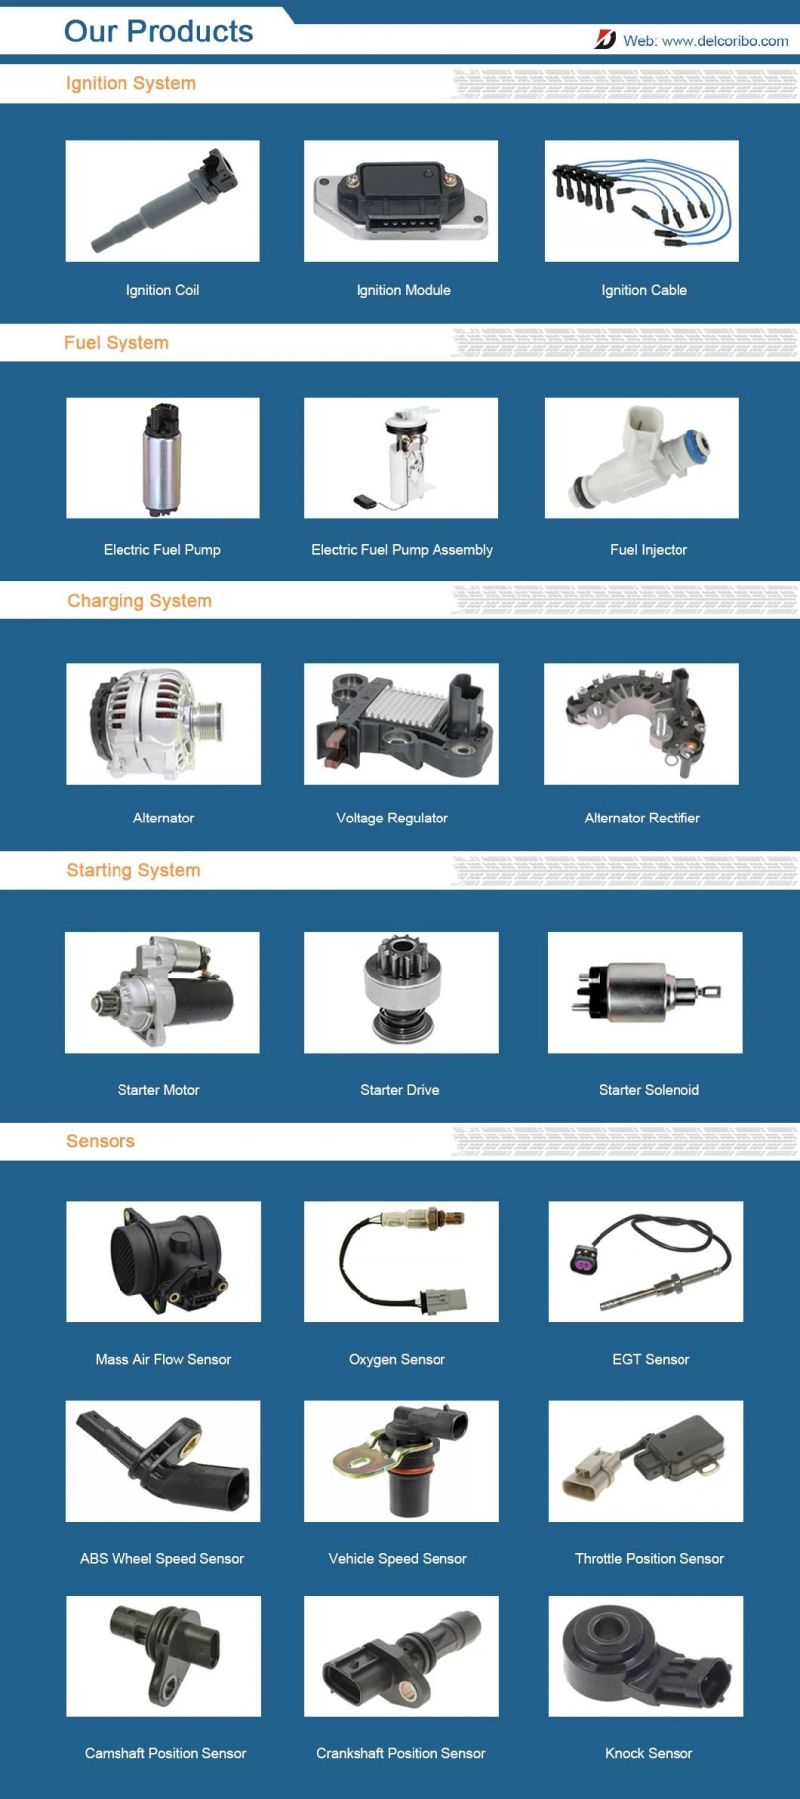 315195-1139020 for Uaz Fuel Pump Assembly